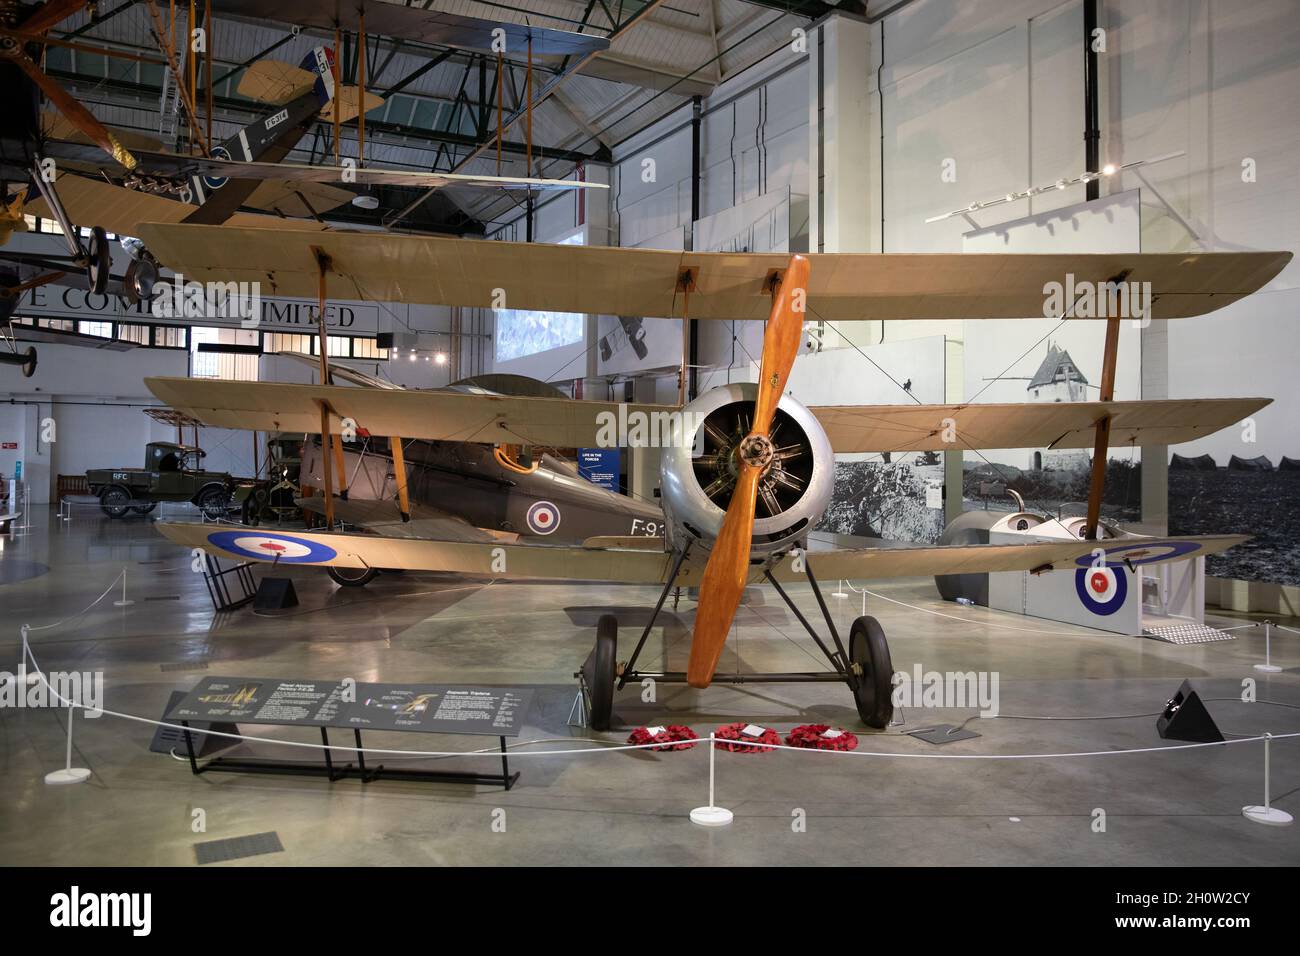 Royal Air Force Museum, London Stockfoto